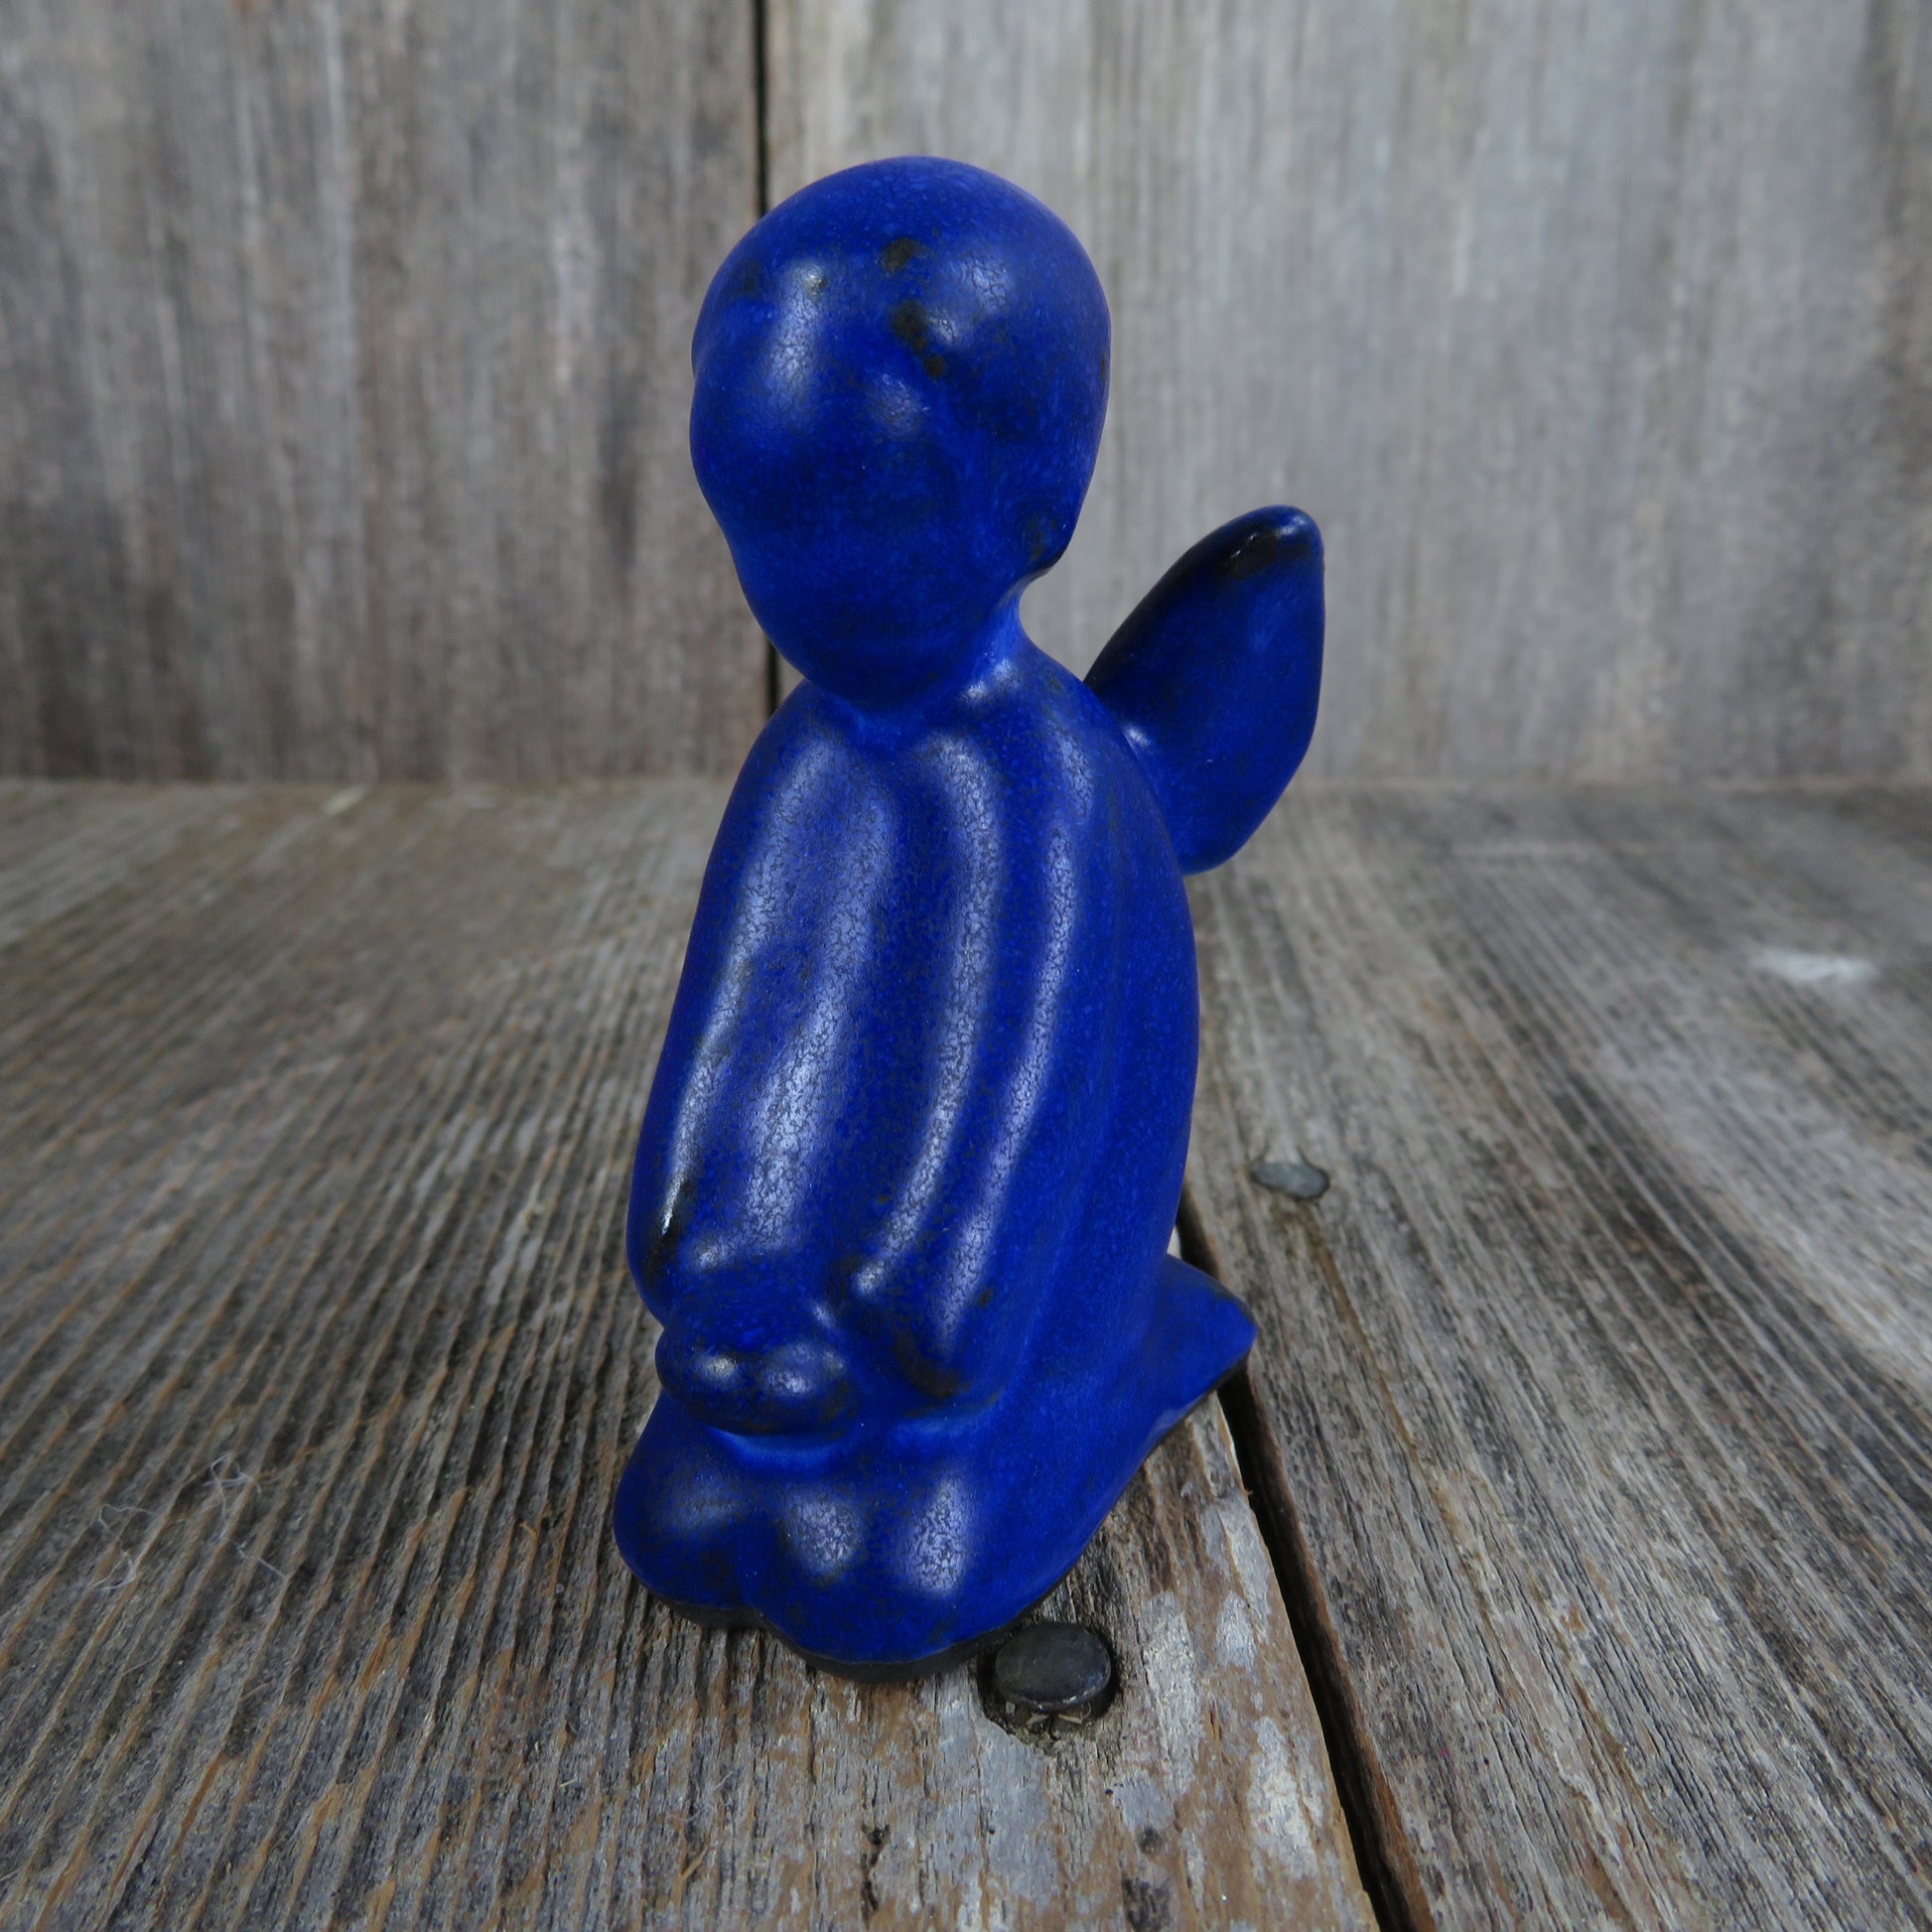 Vintage Kneeling Angel Figurine Gotek Colonia Tovar Praying Blue Glazed Venezuela Clay - At Grandma's Table